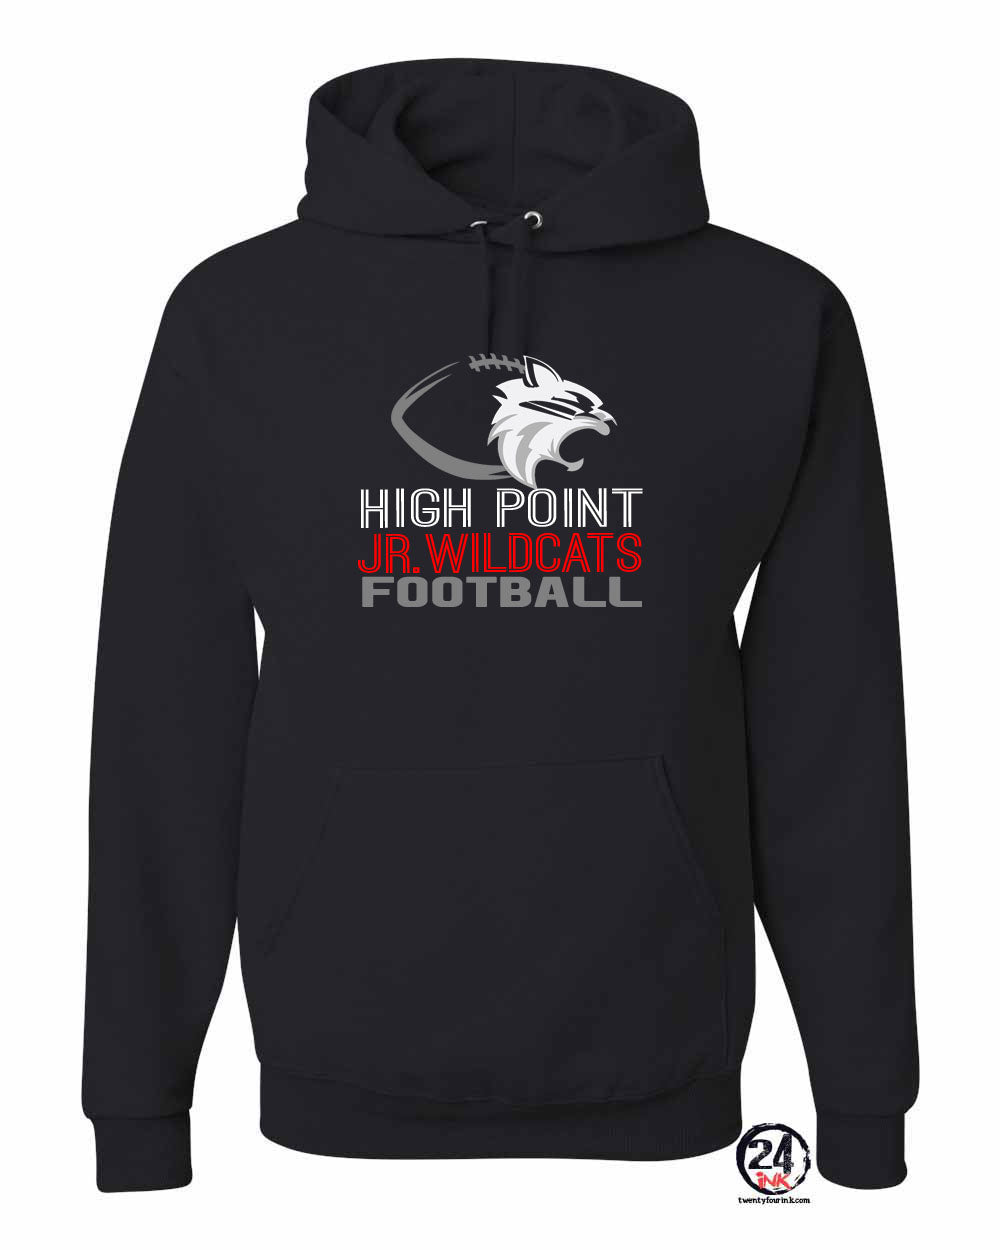 High Point Football Design 1 Hooded Sweatshirt